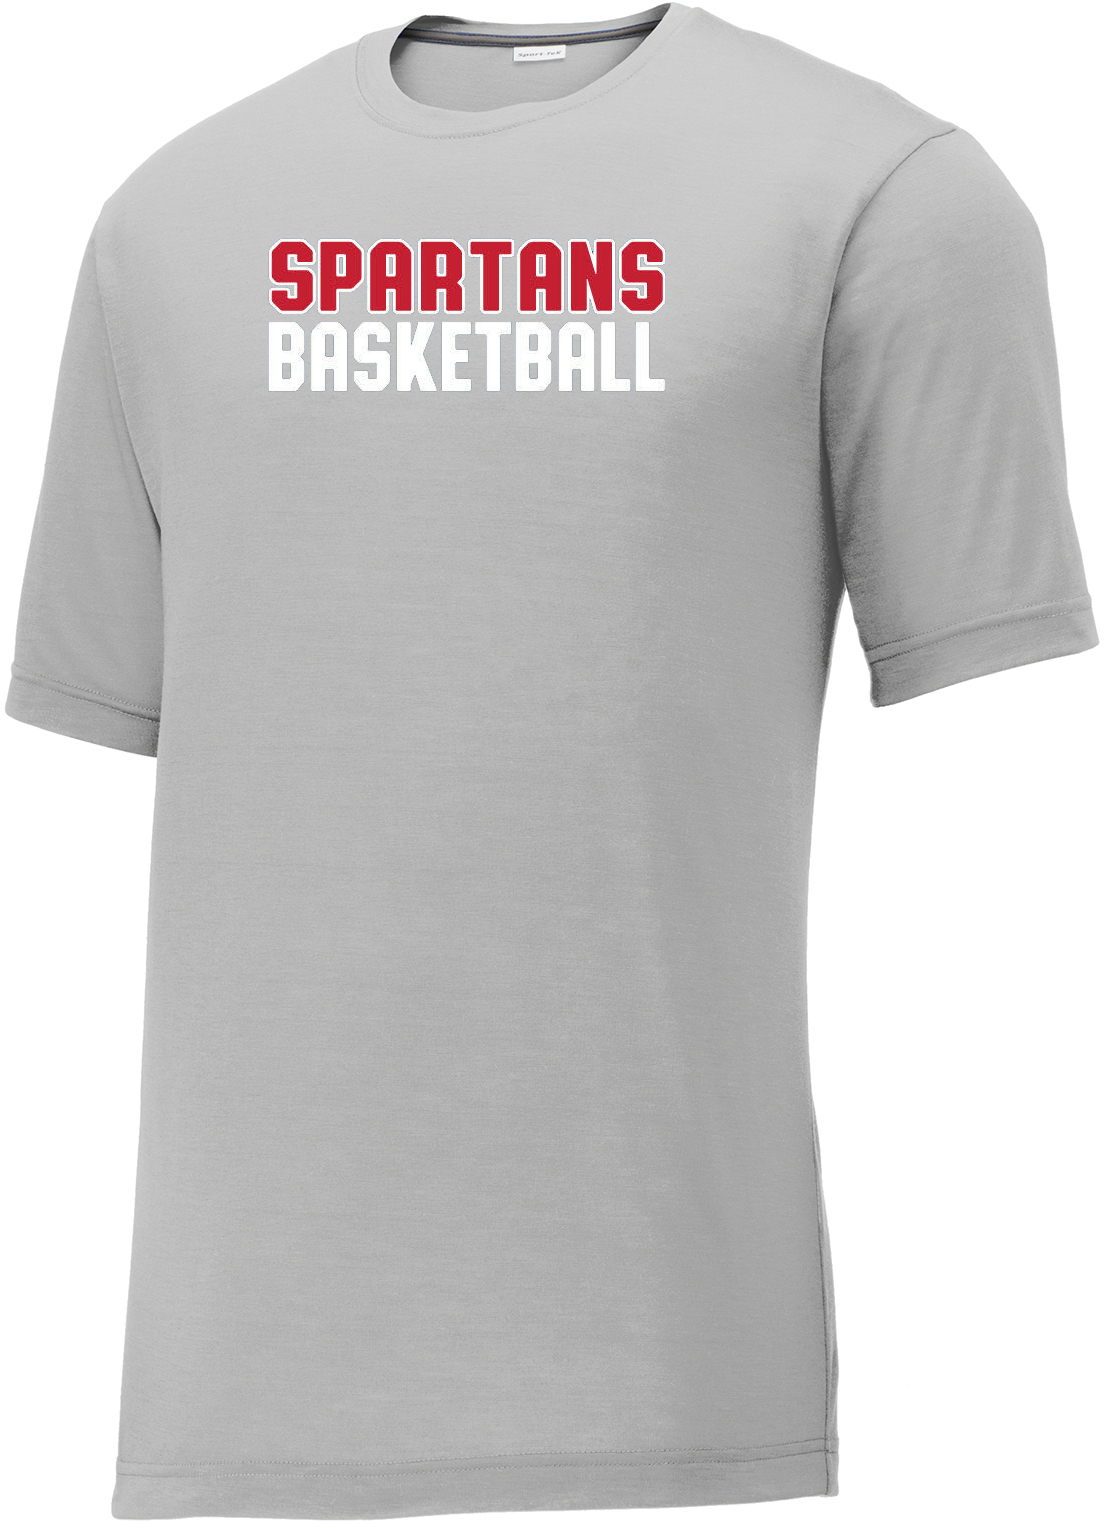 Holy Spirit Basketball CottonTouch Performance T-Shirt